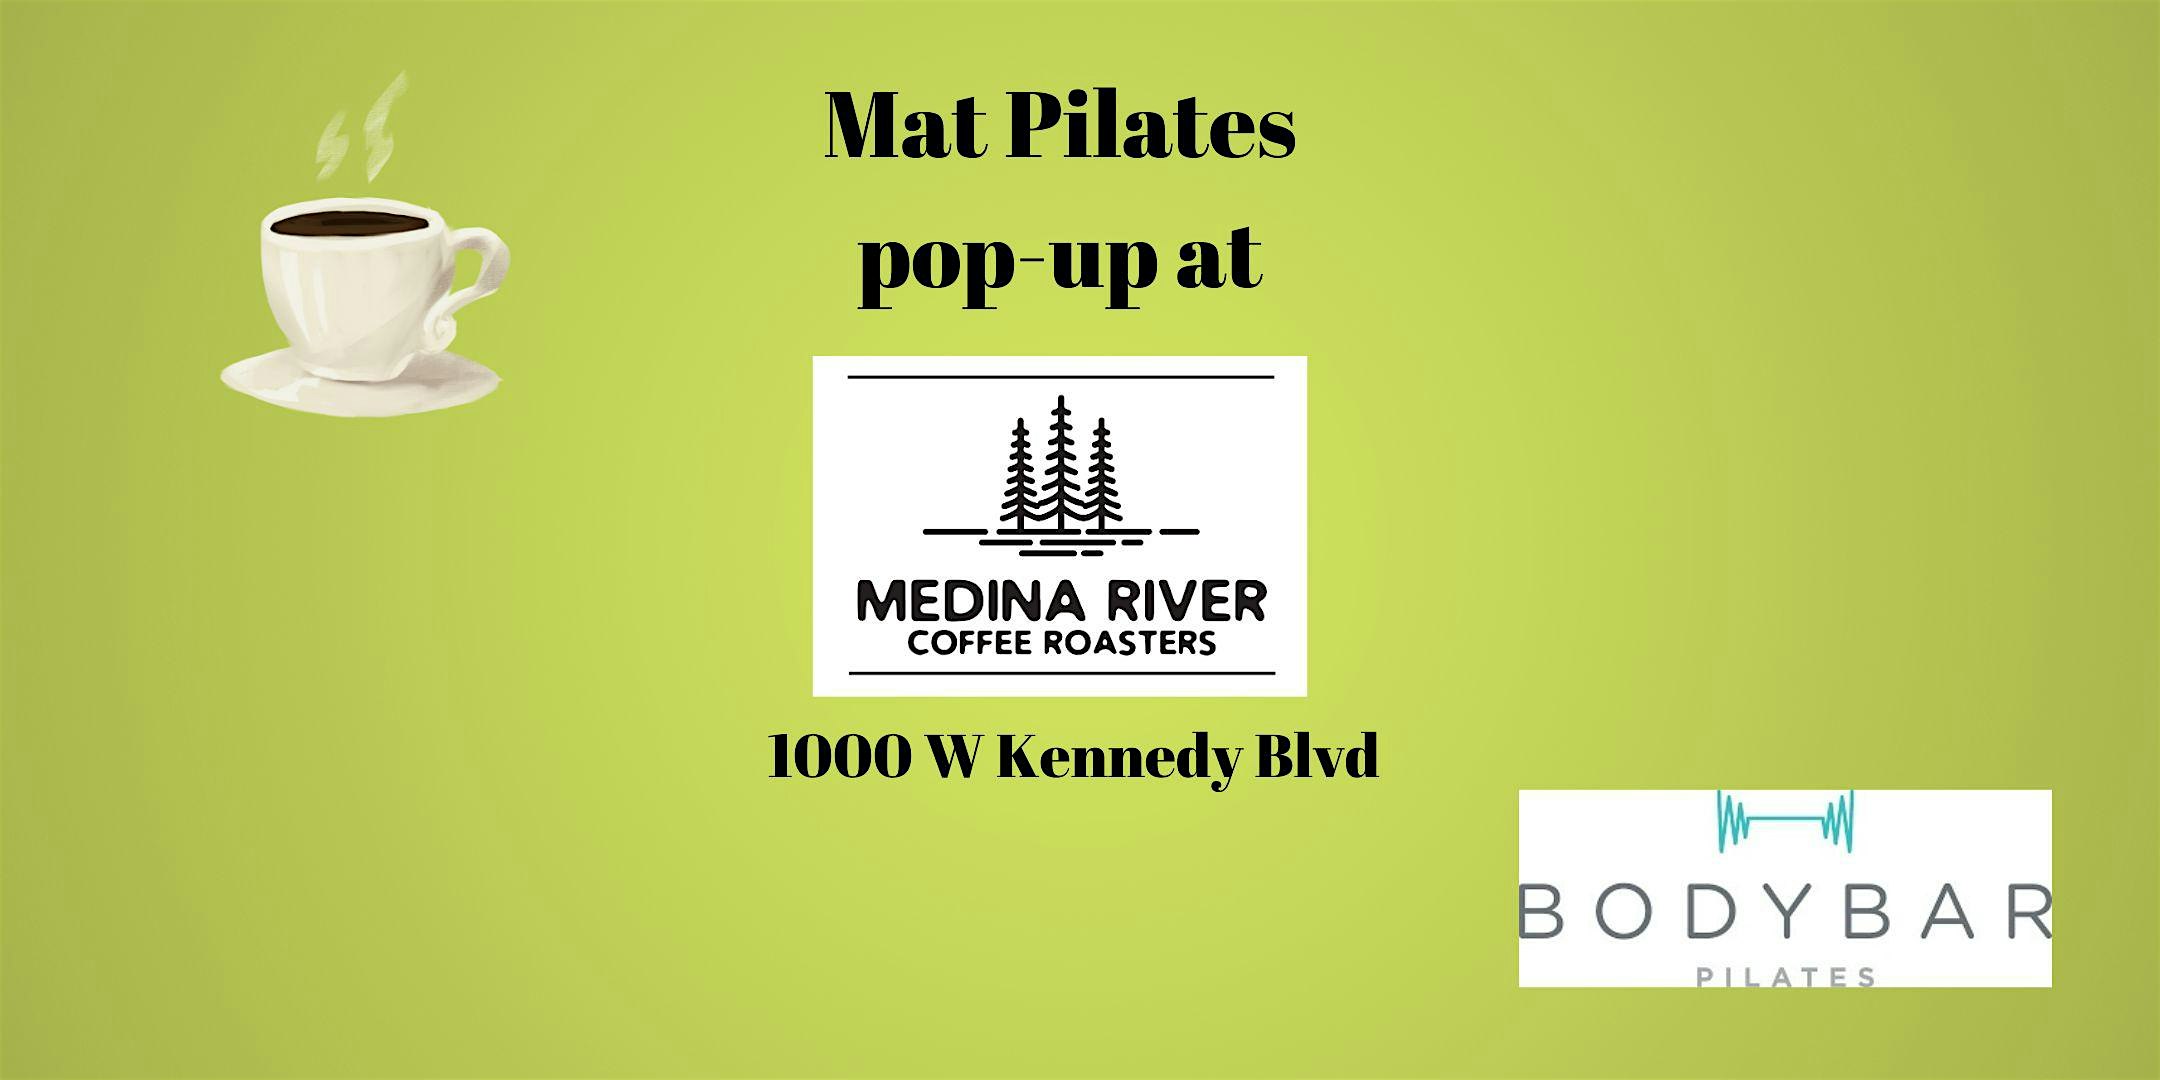 Bodybar Pilates x Medina River Coffee Roasters